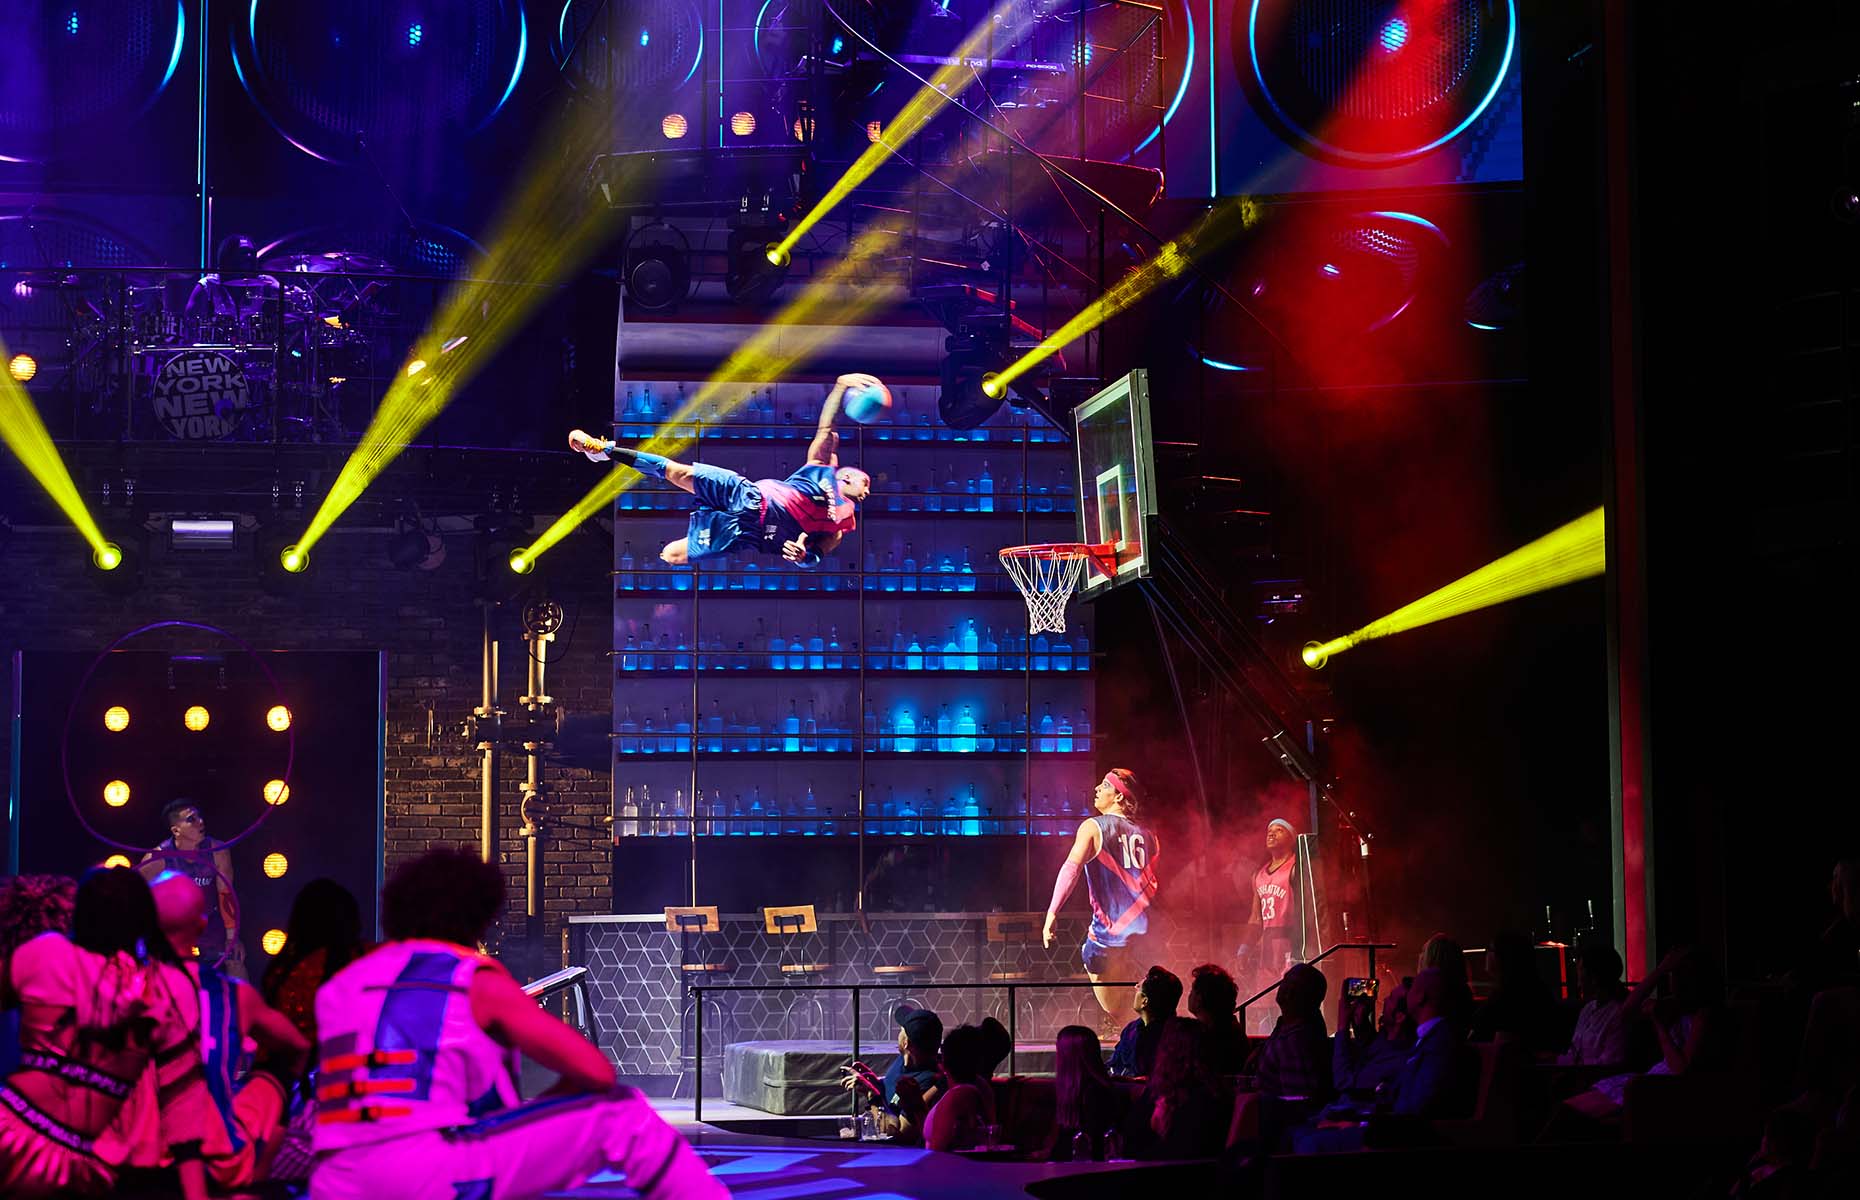 Basketball at Mad Apple, new Cirque du Soleil show (Image: Courtesy of Cirque du Soleil)